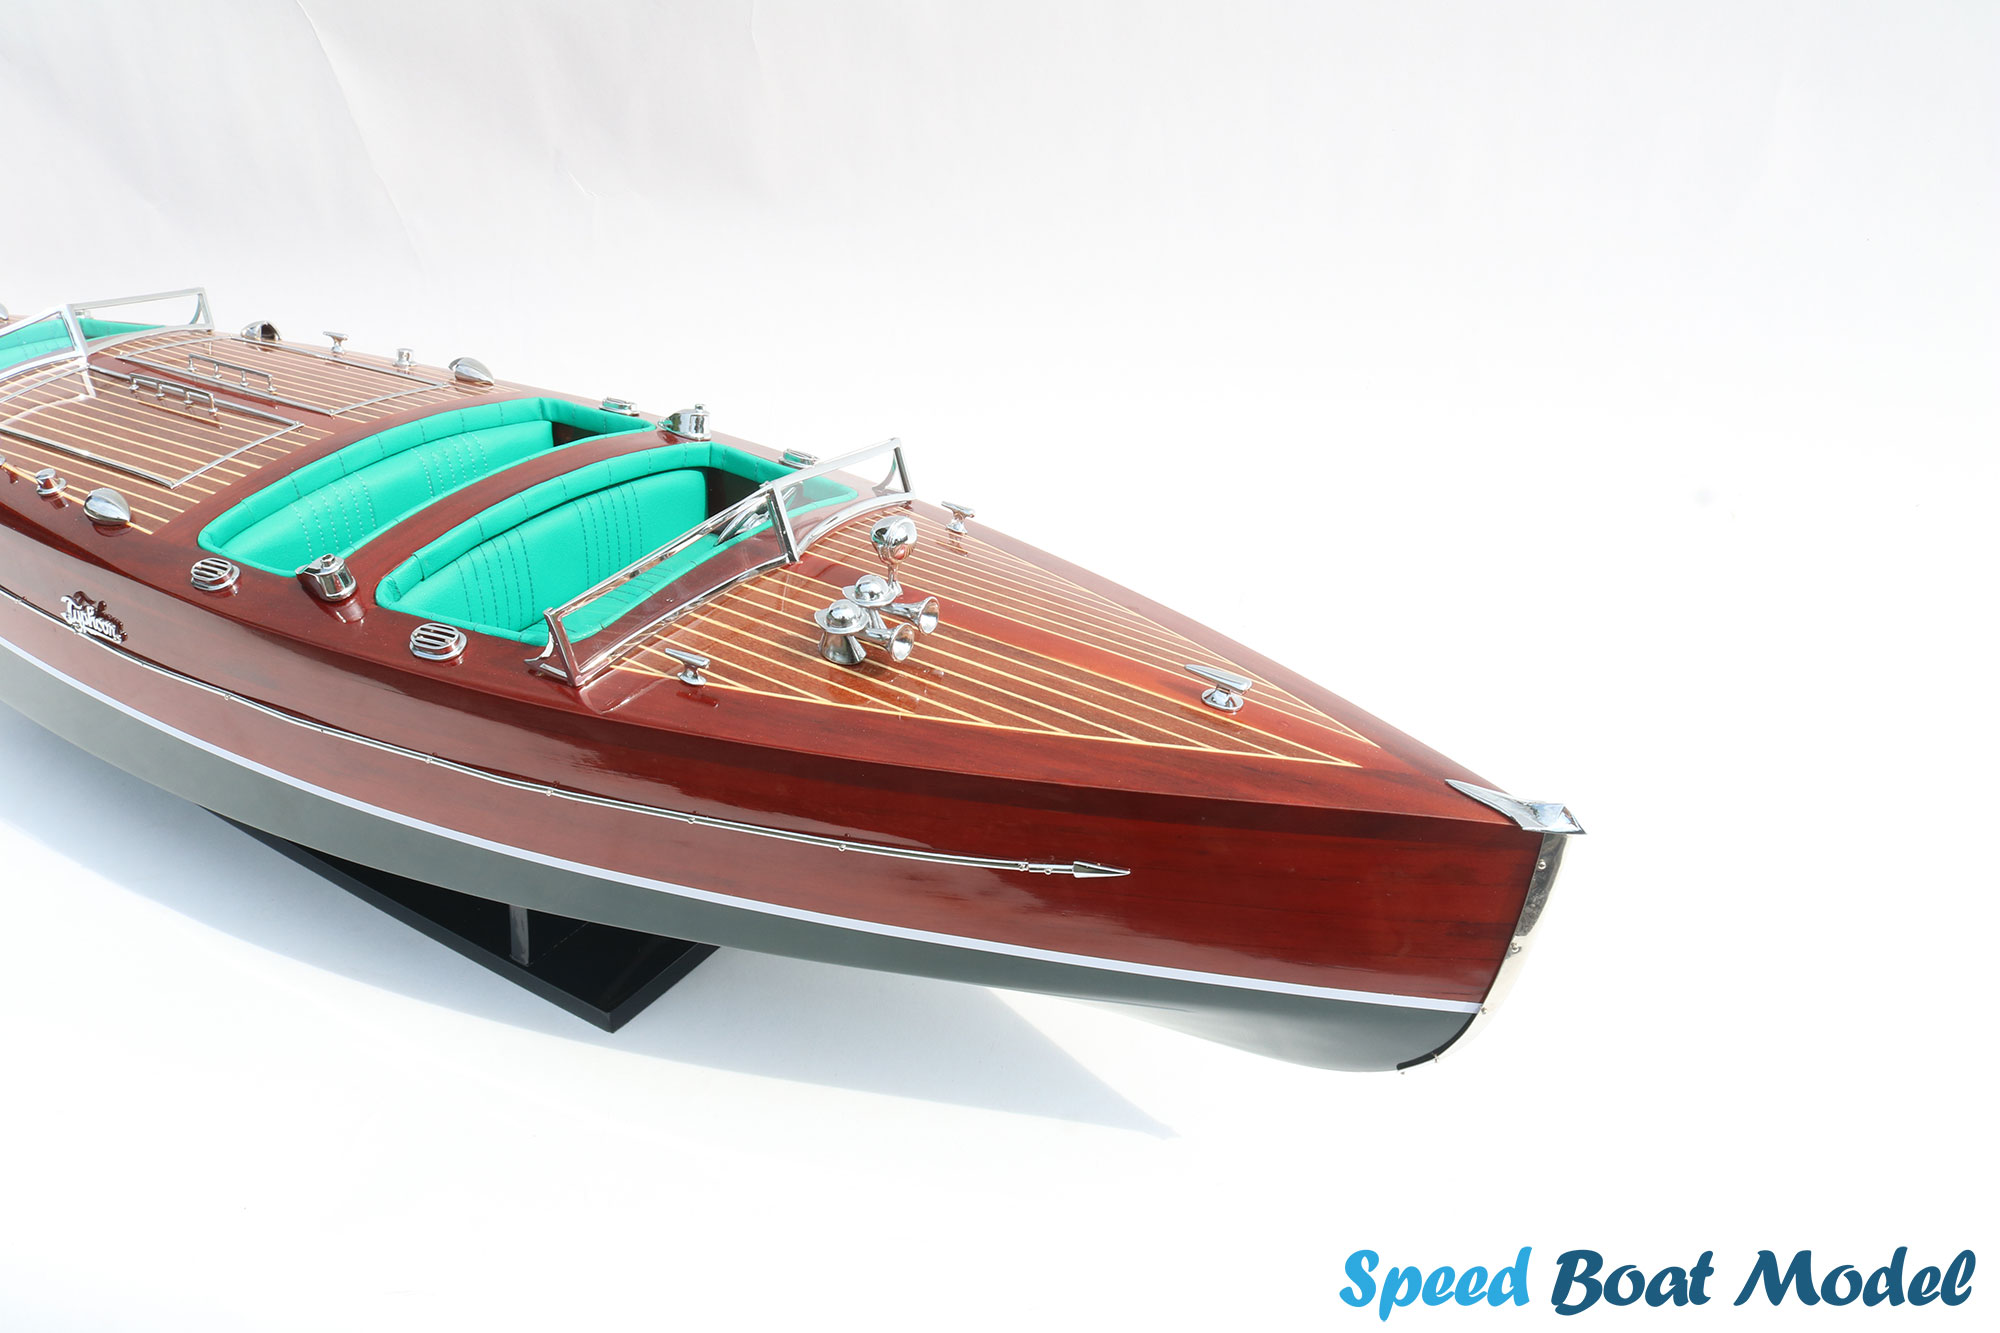 Riva Typhoon Speed Boat Model 39.37"